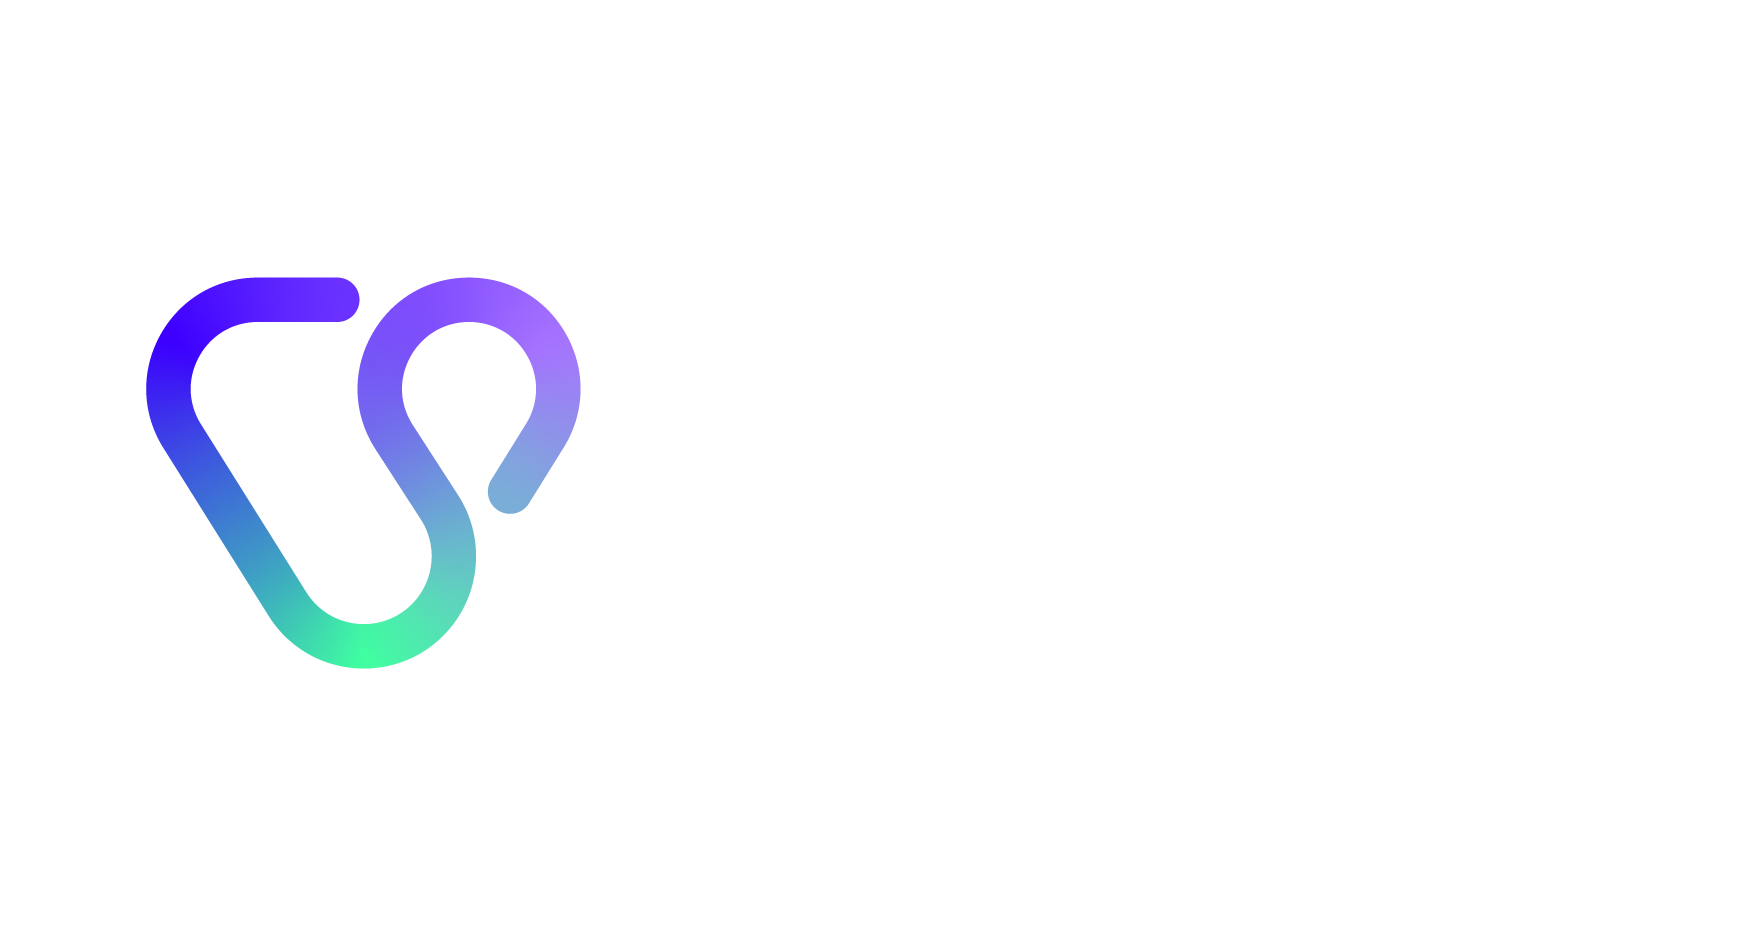 Venture studio logo